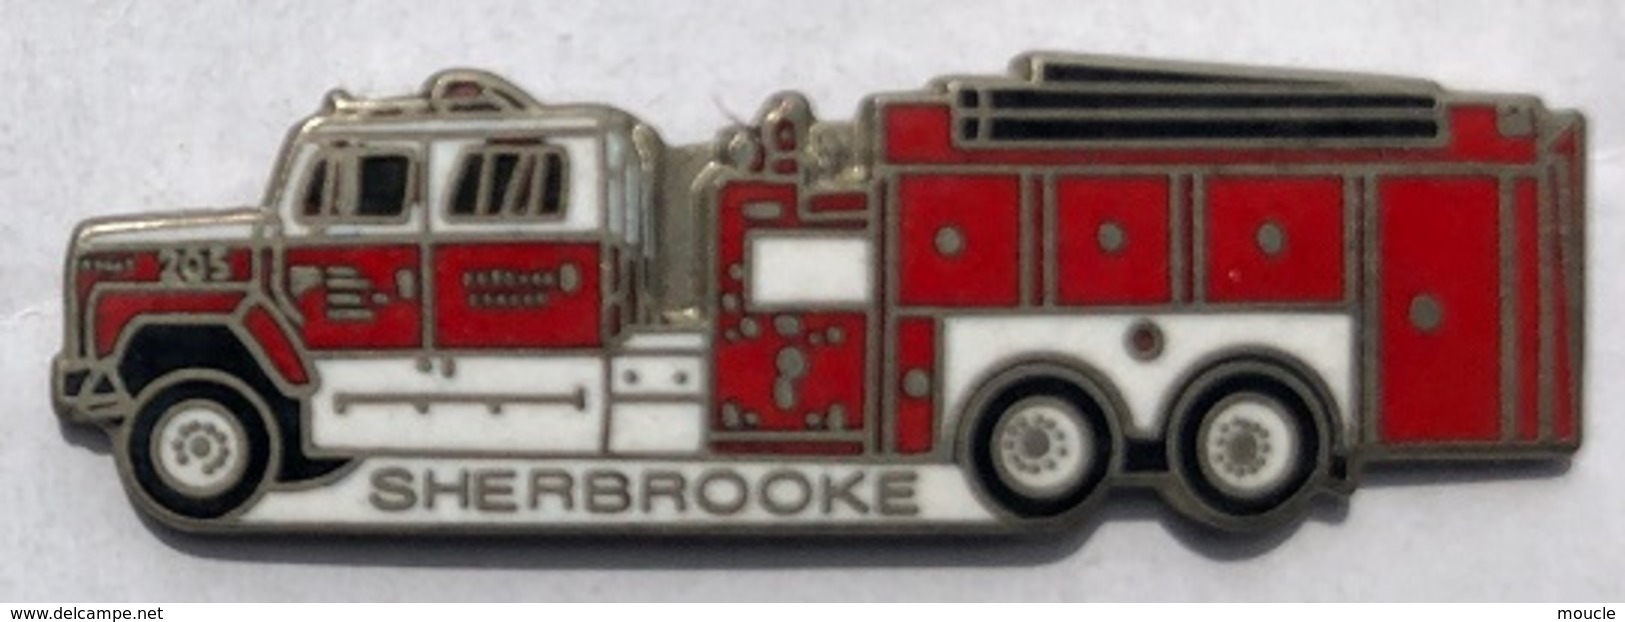 SAPEURS POMPIERS SHERBROOKE  - SERVICE DU FEU - CAMION - TRUCK FIREFIGHTERS - LKW - FEUERWEHRMANN - USA - US - (24) - Pompiers